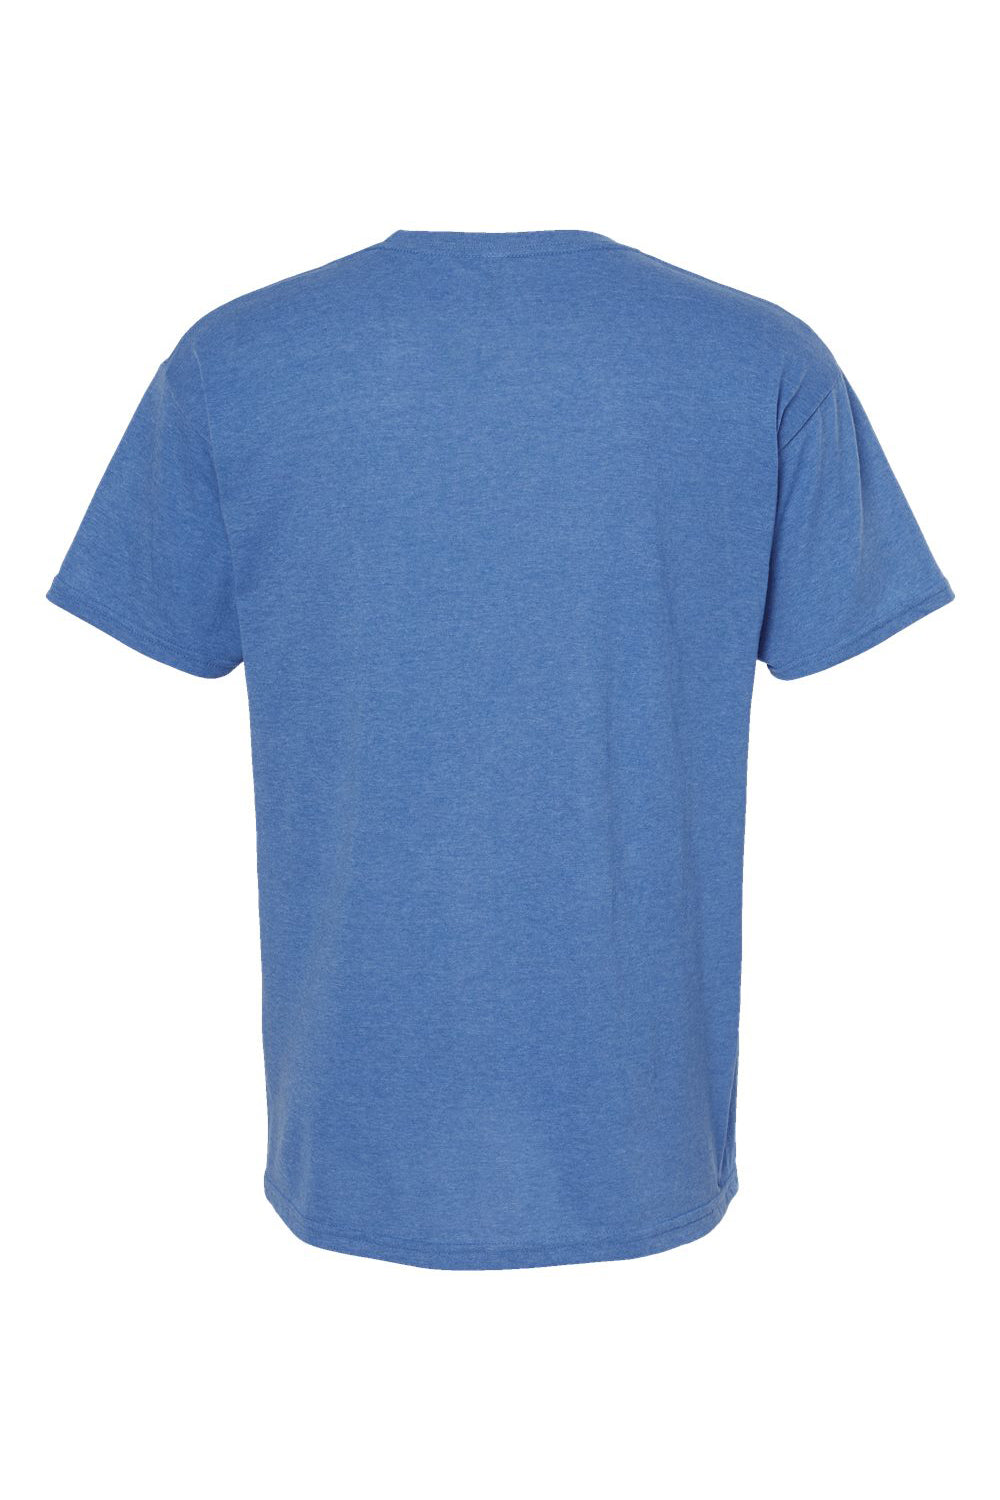 M&O 4800 Mens Gold Soft Touch Short Sleeve Crewneck T-Shirt Heather Royal Blue Flat Back